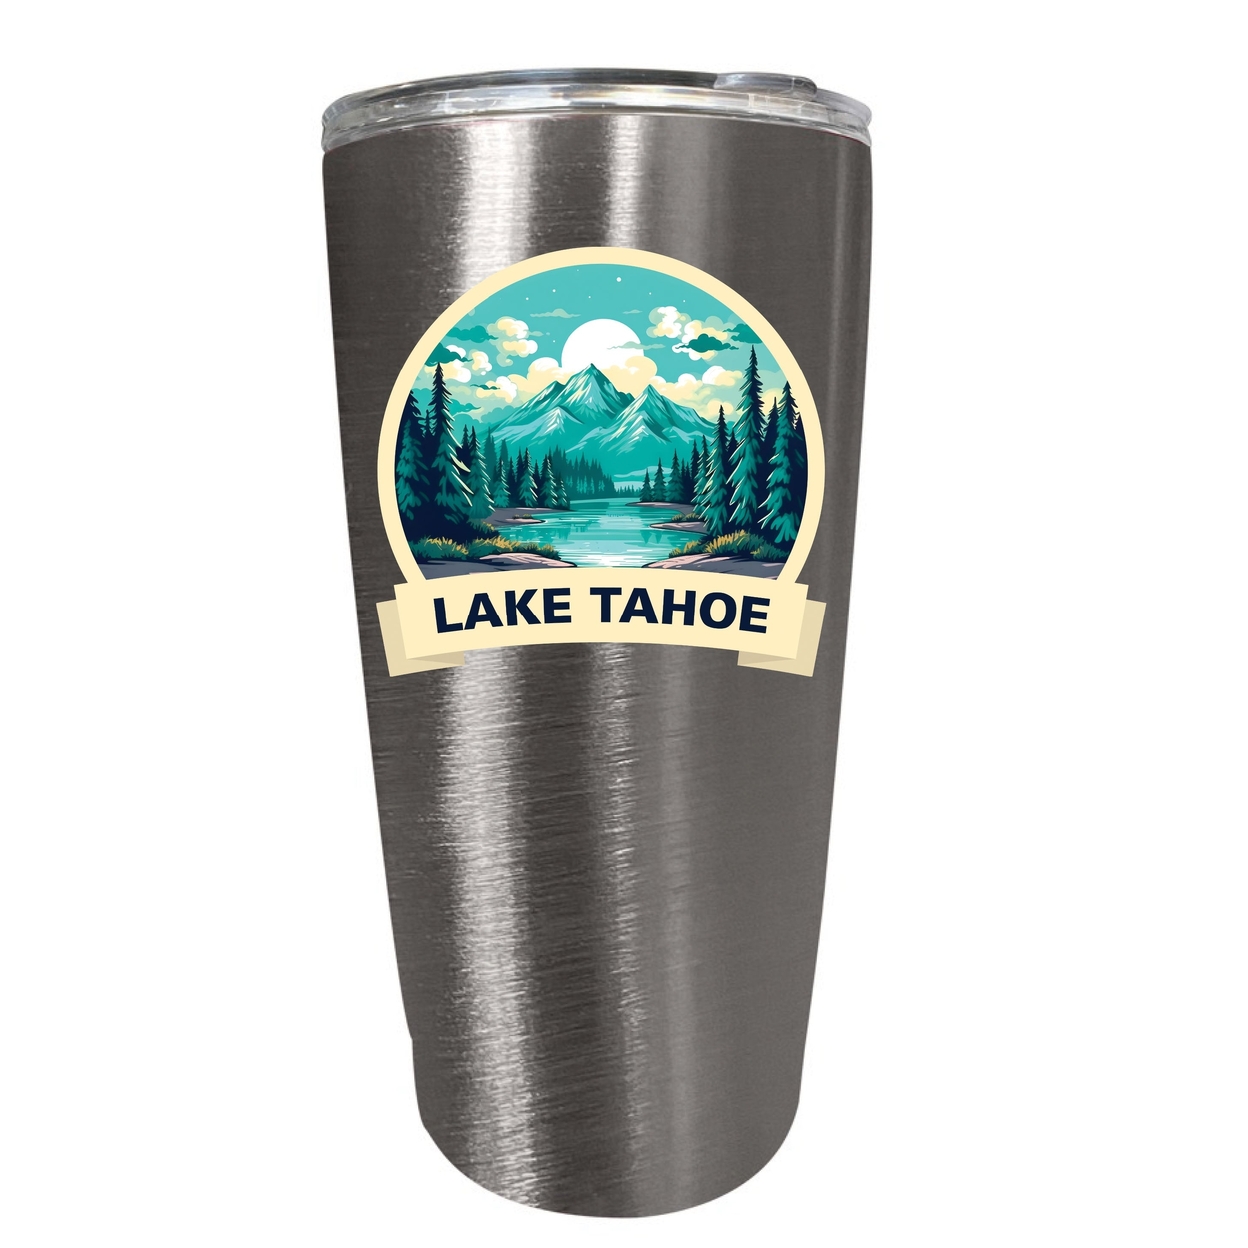 Lake Tahoe California Souvenir 16 Oz Stainless Steel Insulated Tumbler - Green,,4-Pack